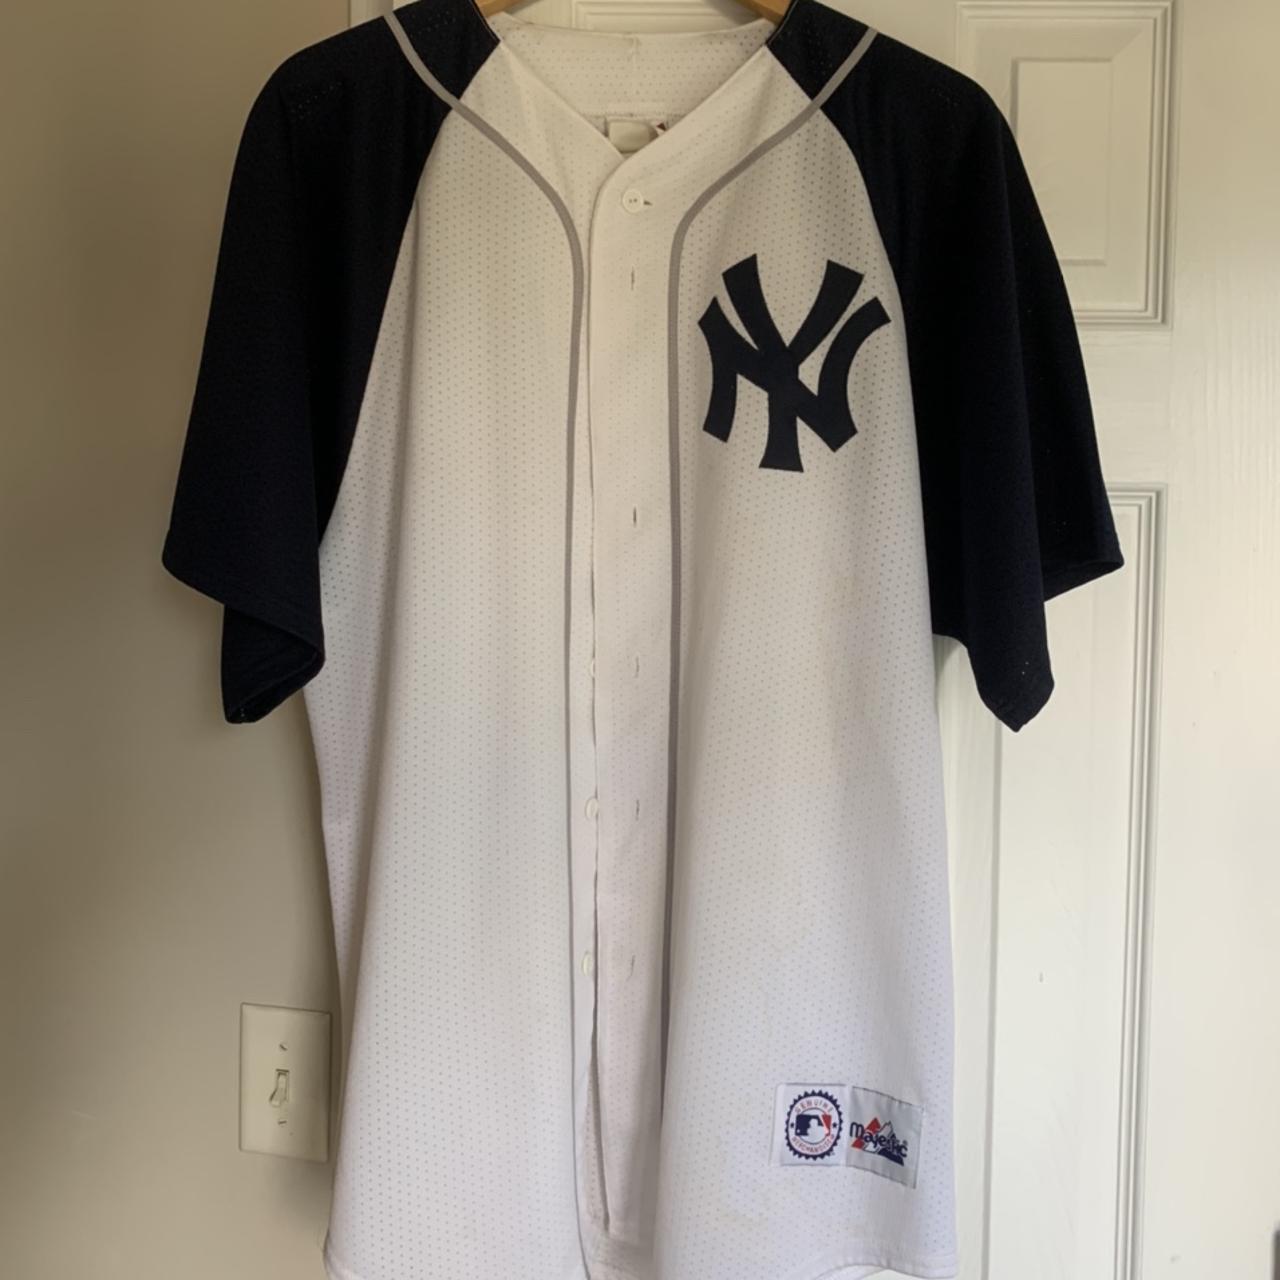 Majestic New York Yankees Mesh Jersey at